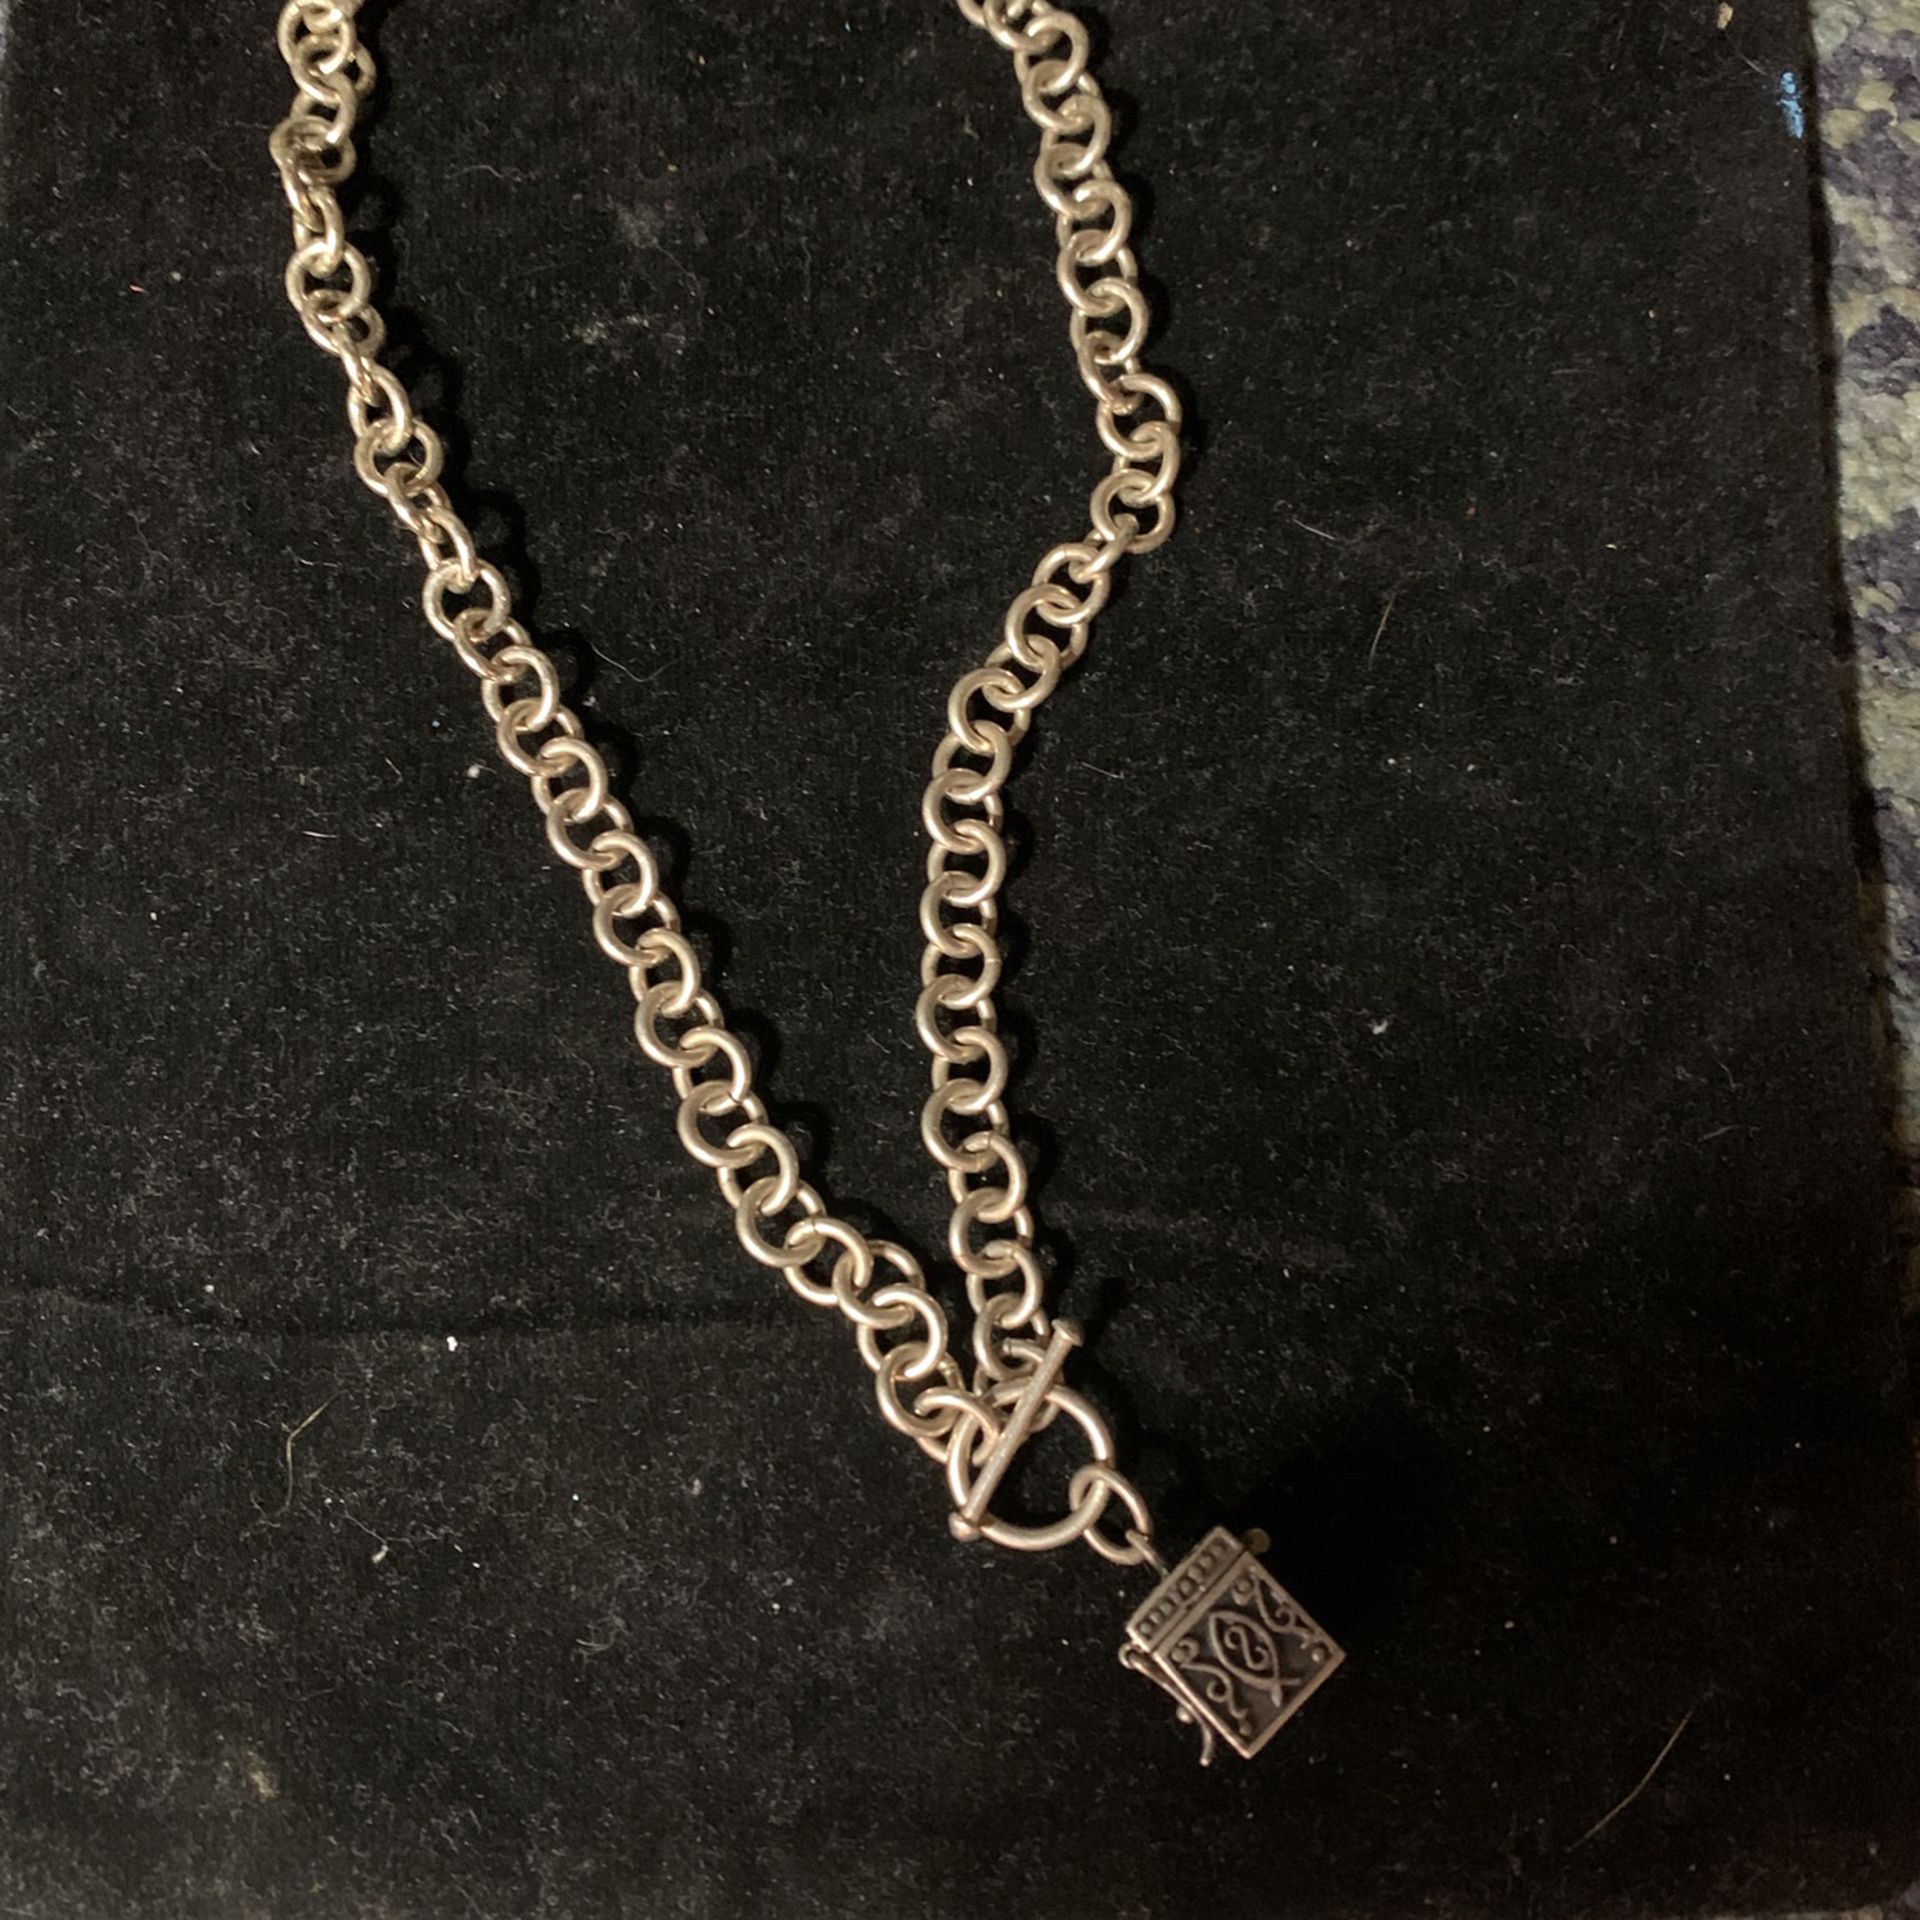 9 inch chain with Lil locket box cute